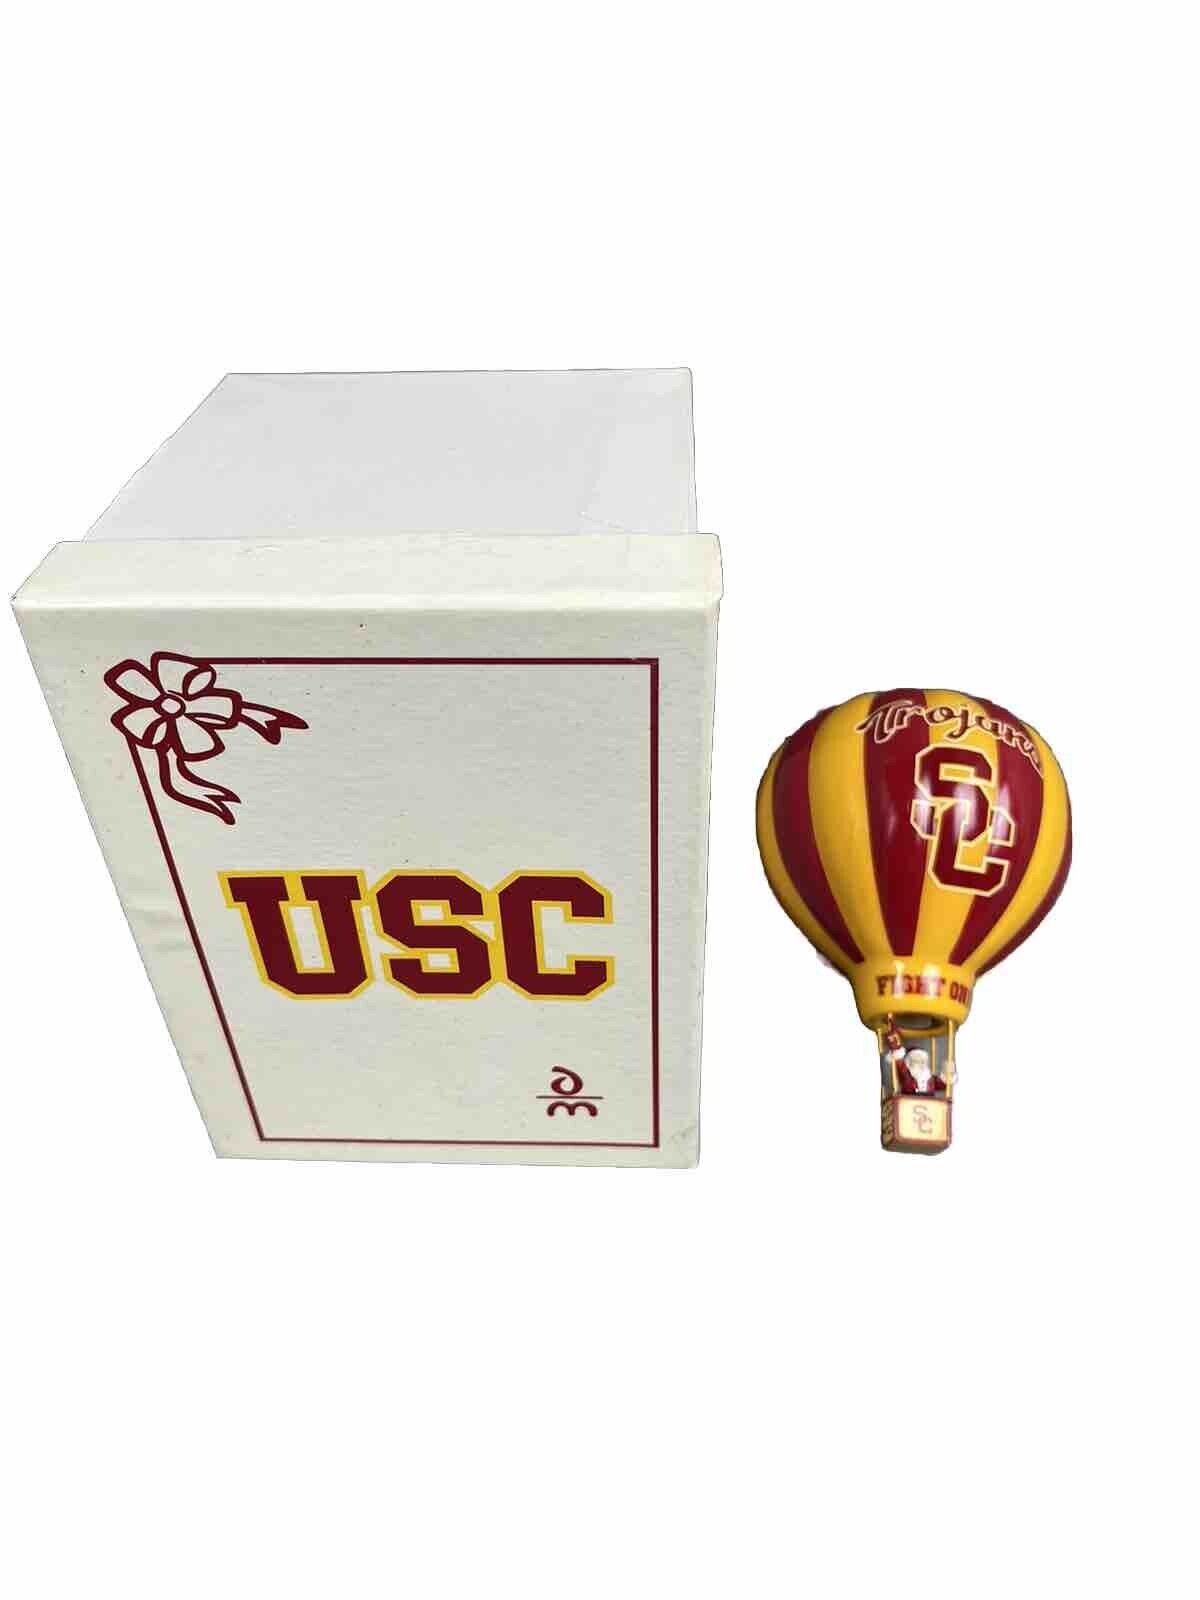 USC Trojans Ornament Hot Air Balloon Danbury Mint Christmas Ornament 2004 W/ Box